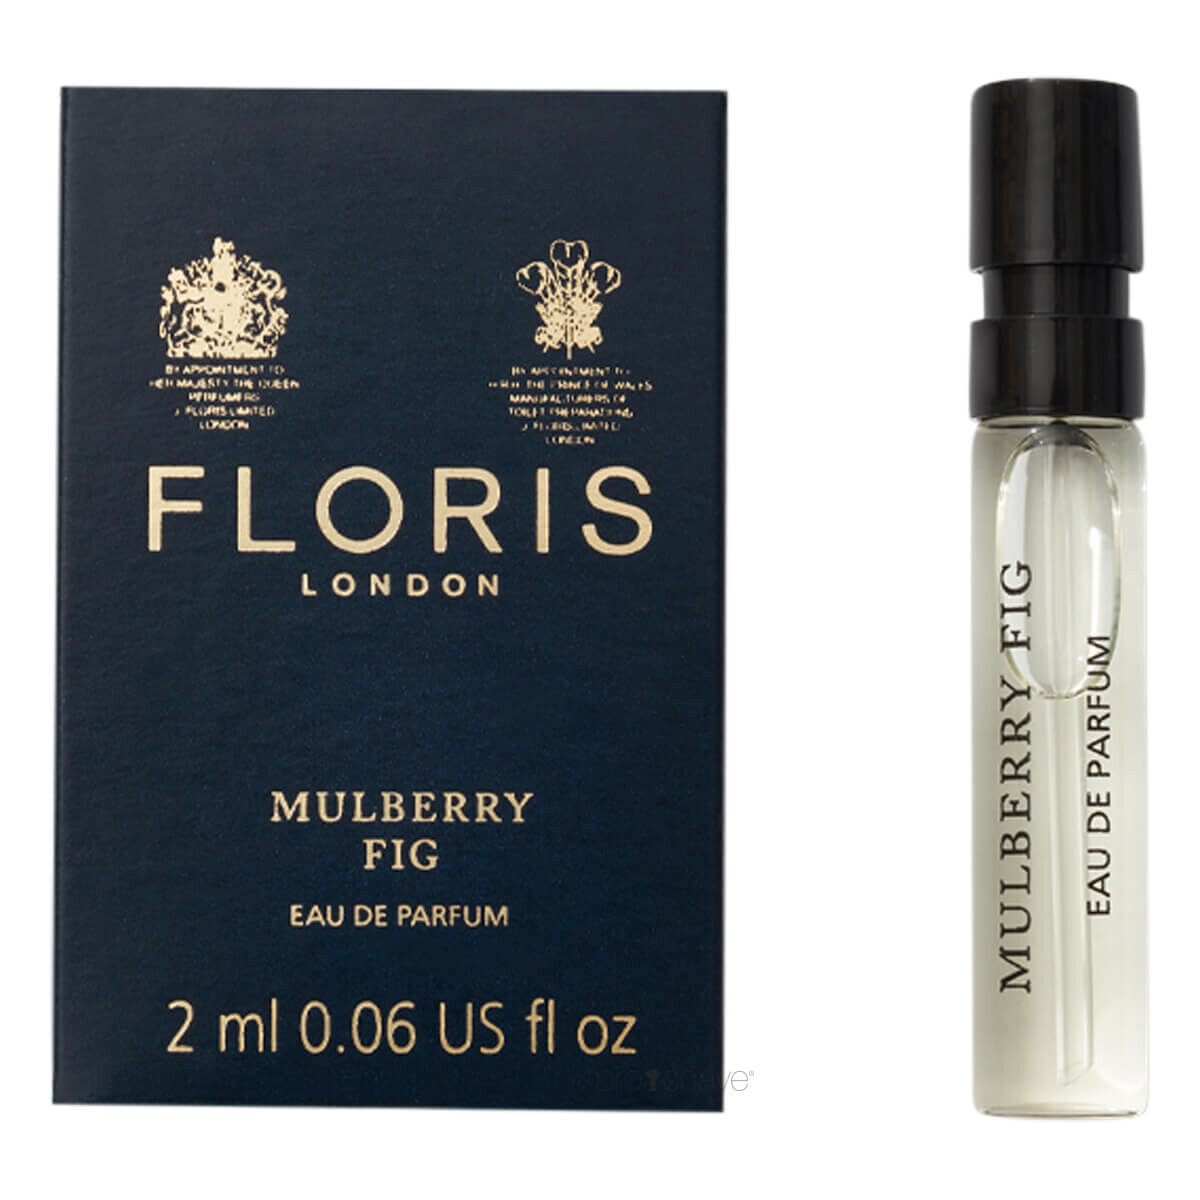 Billede af Floris Mulberry Fig, Eau de Parfum, DUFTPRØVE, 2 ml.